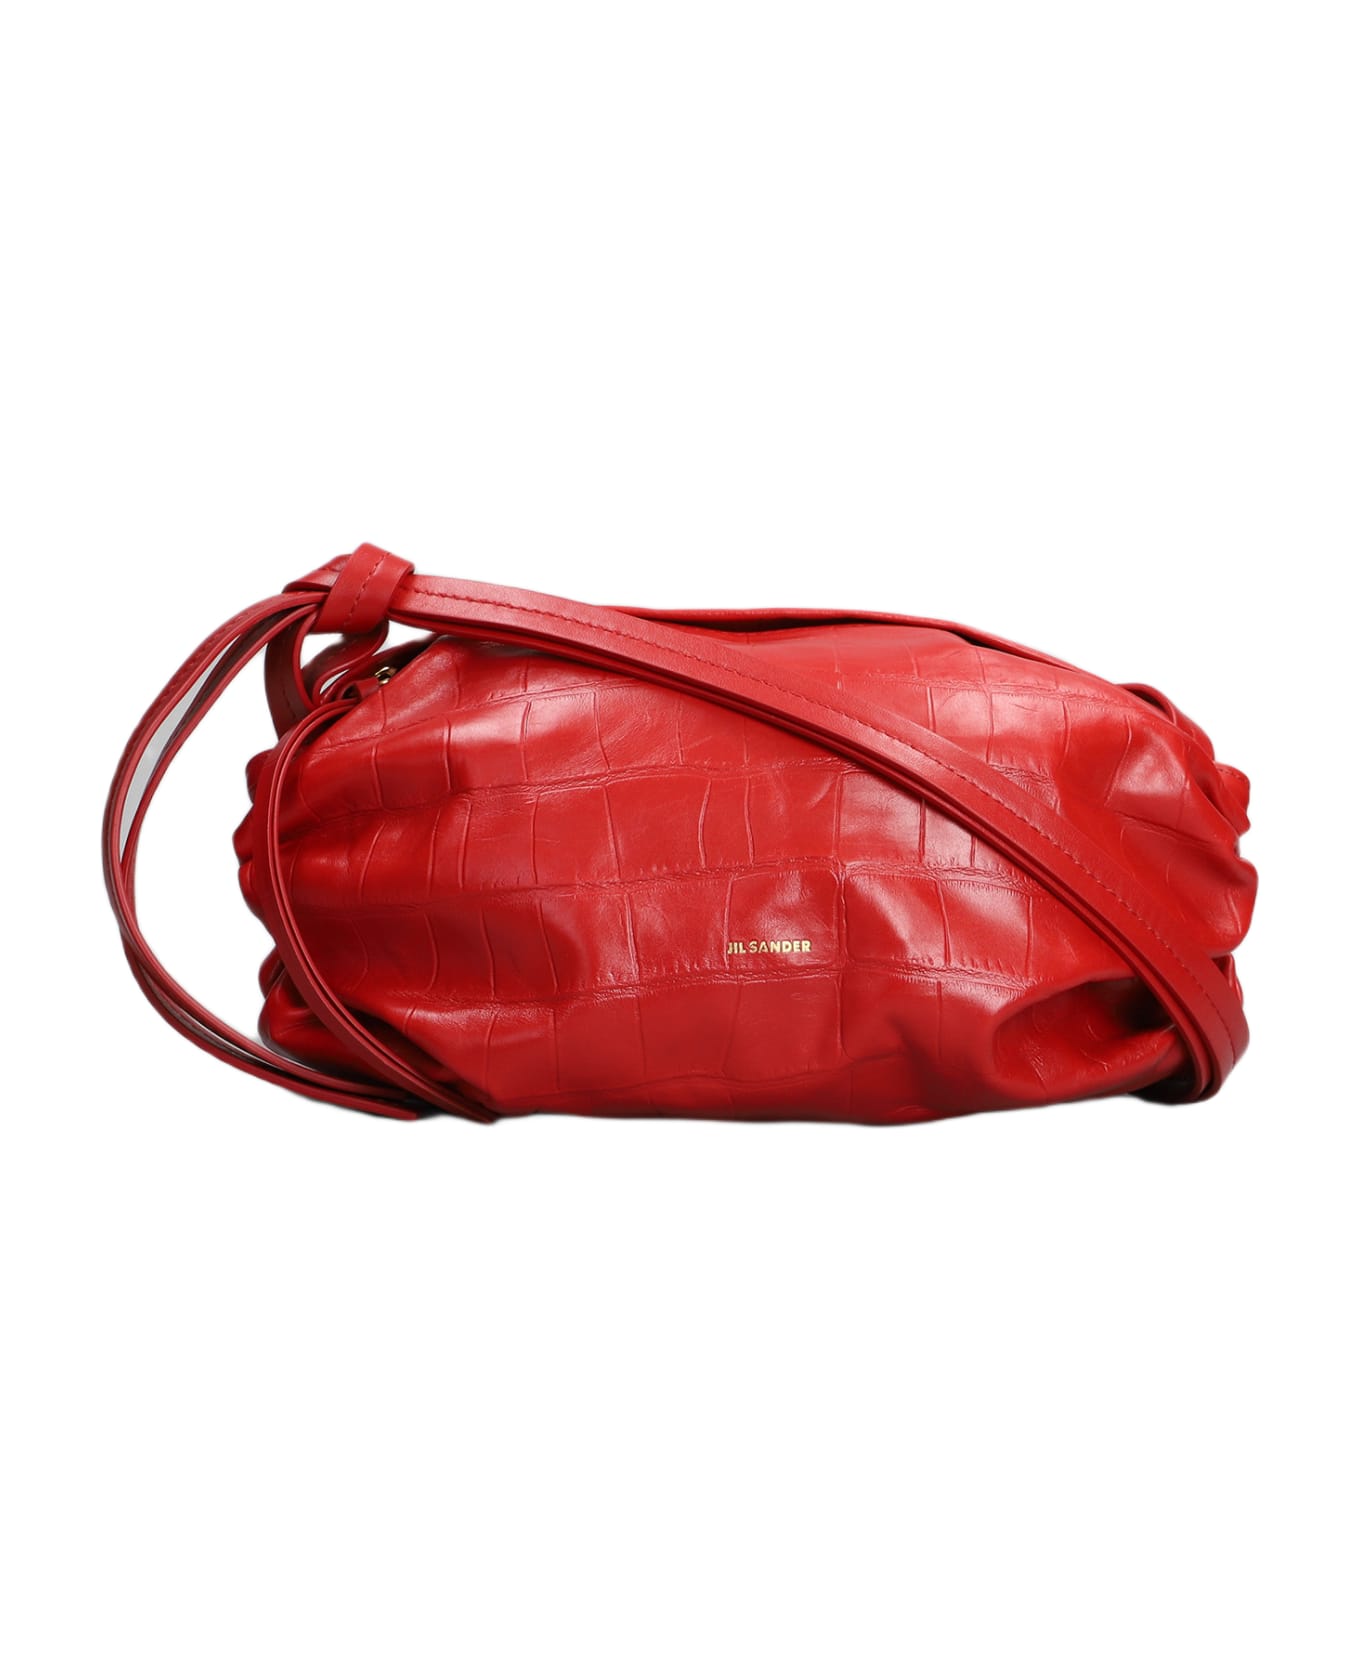 Jil Sander Shoulder Bag In Red Leather - red ショルダーバッグ